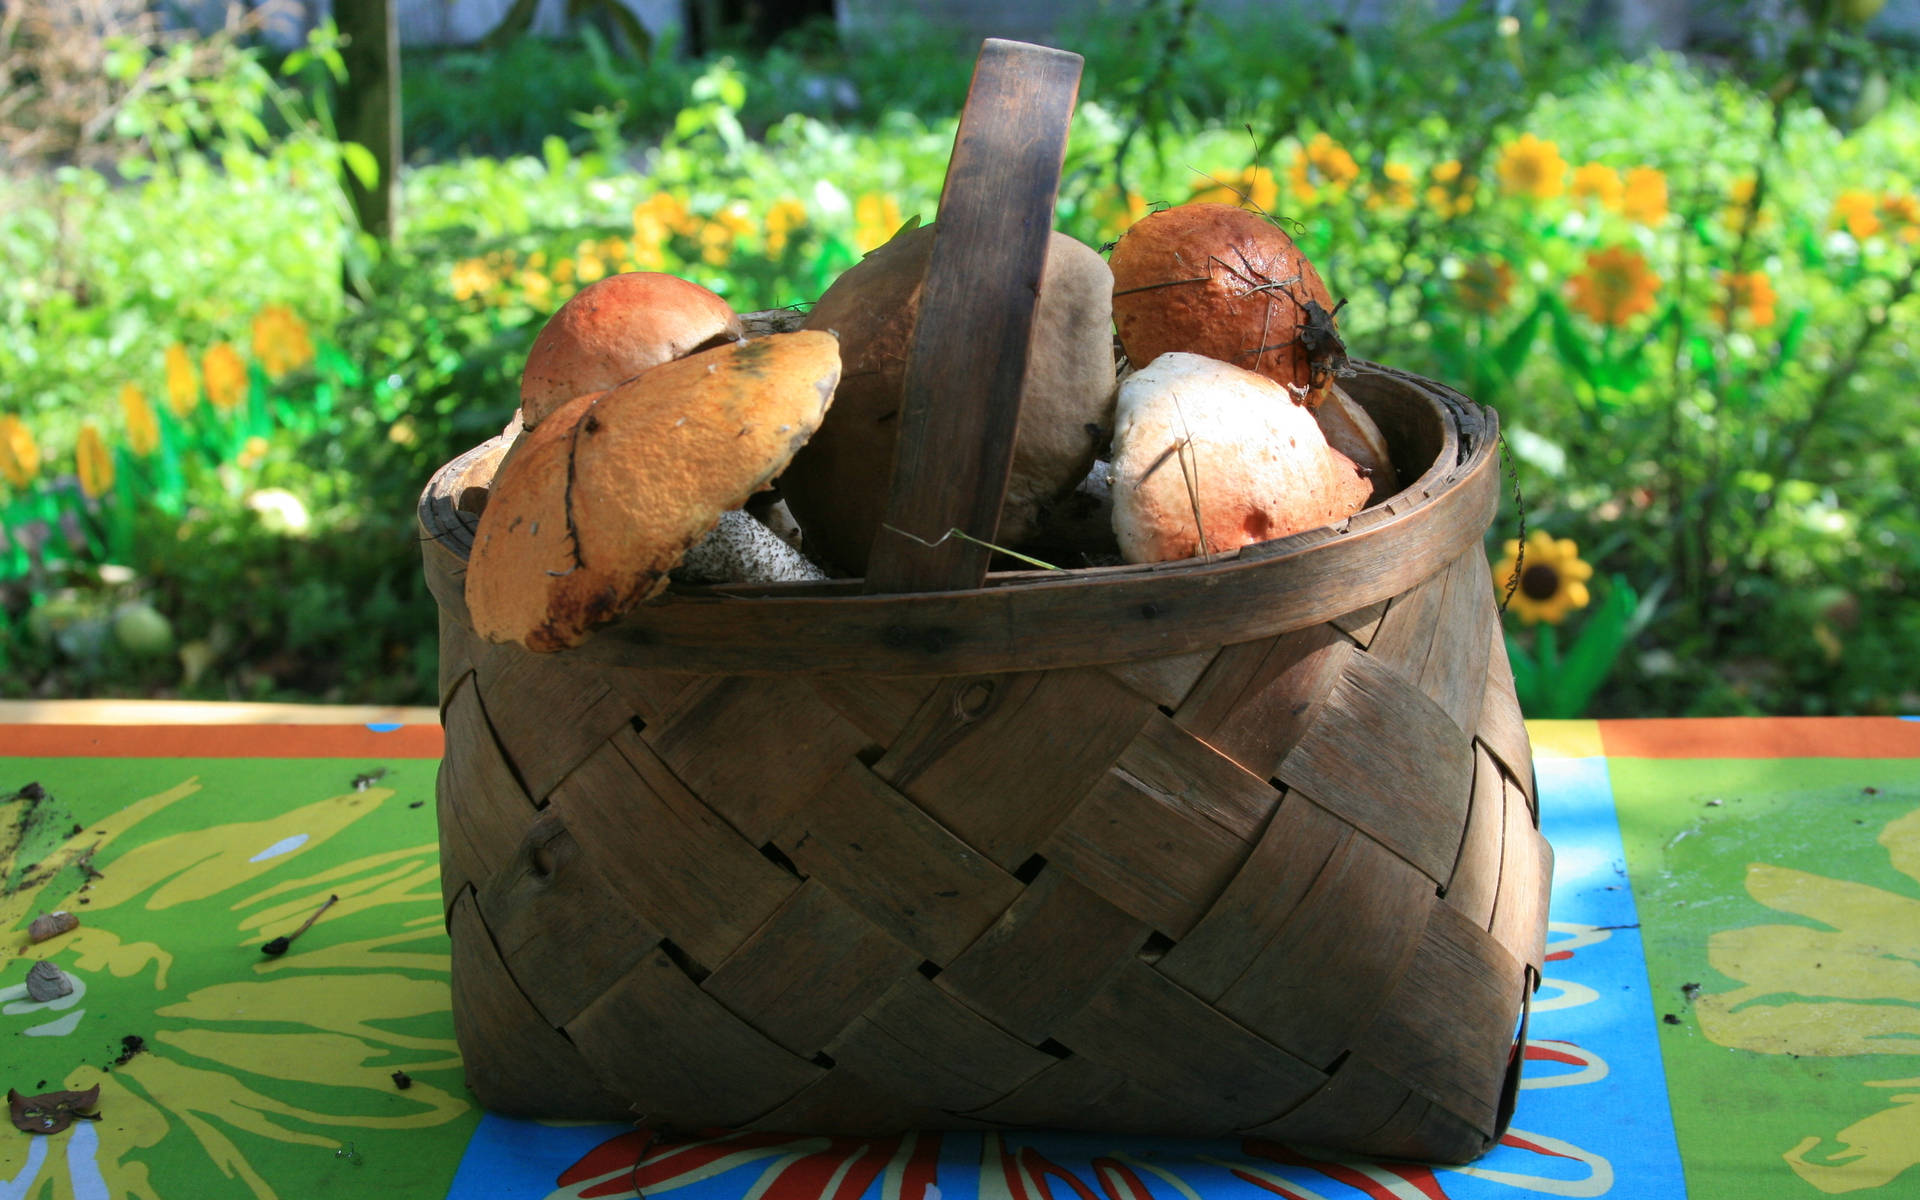 Basket Full Of Cute Mushrooms Background